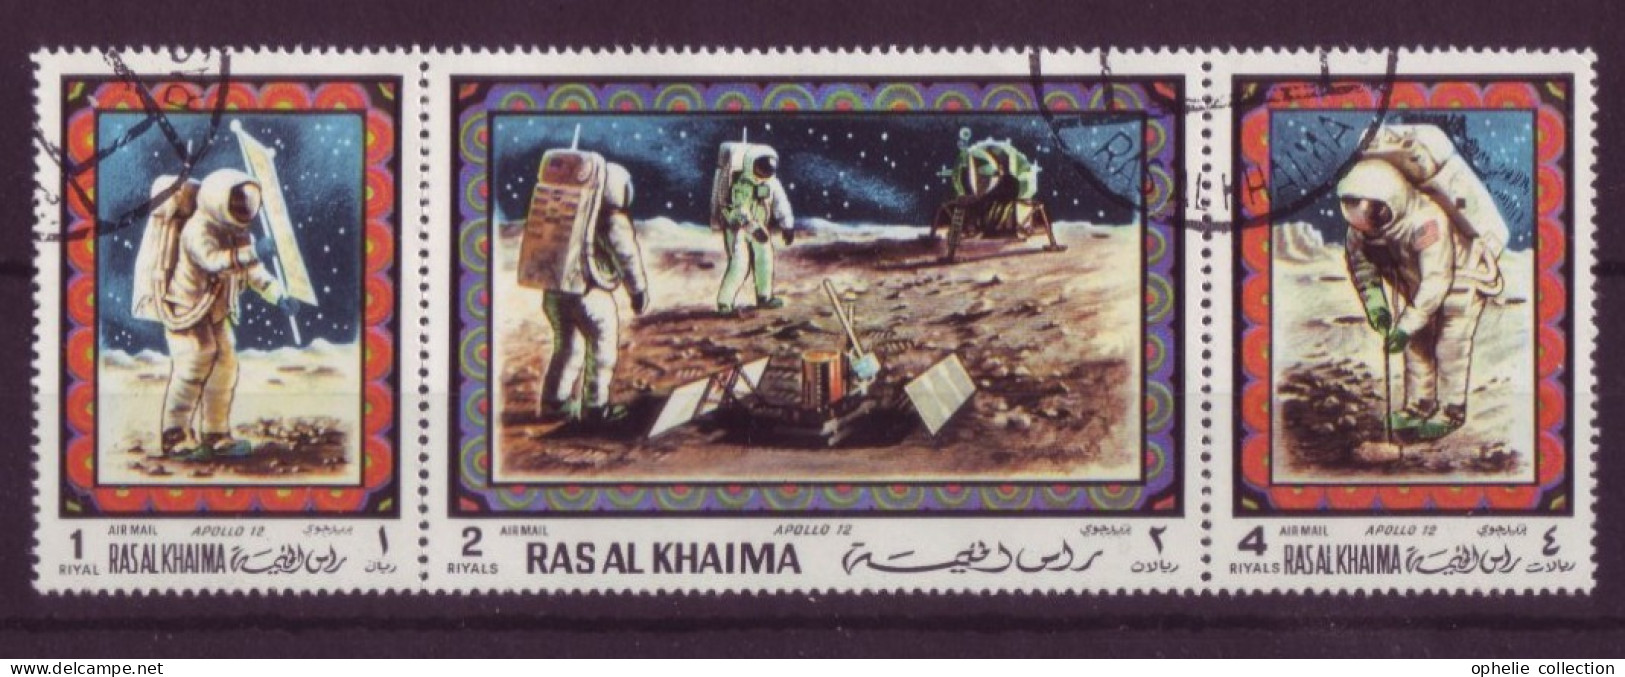 Asie - Ras-el-Khaima - Apollo XII - Bandeau De 3 Timbres - 6941 - Ras Al-Khaima